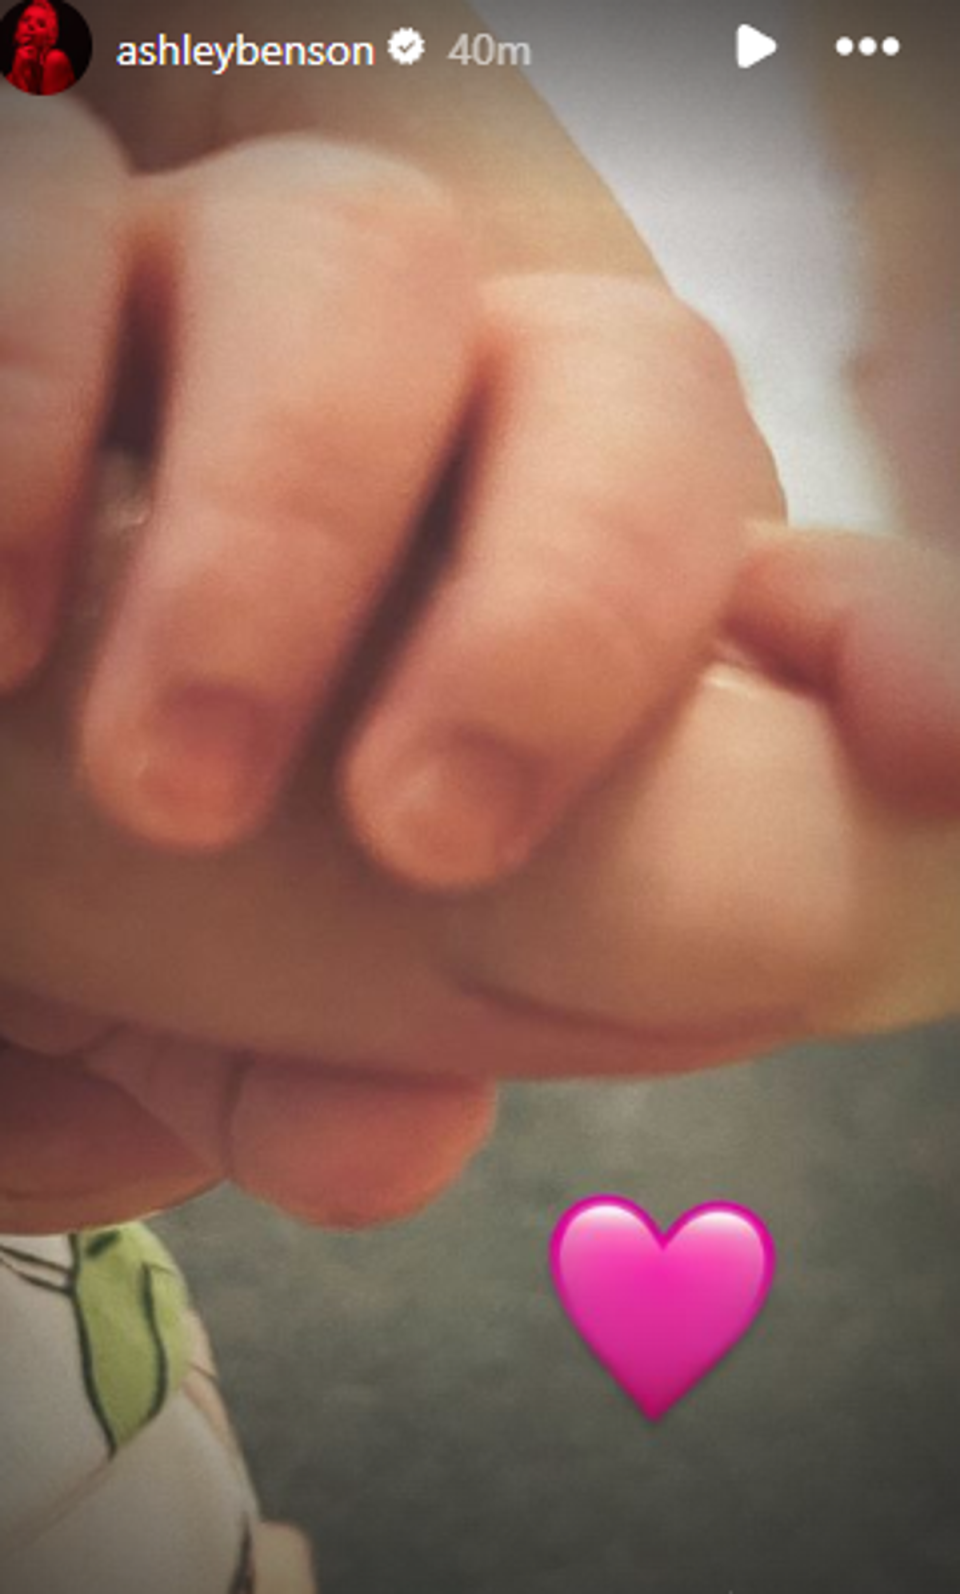 Ashley Benson’s Instagram story featuring a newborn baby’s hand (ashleybenson / Instagram)